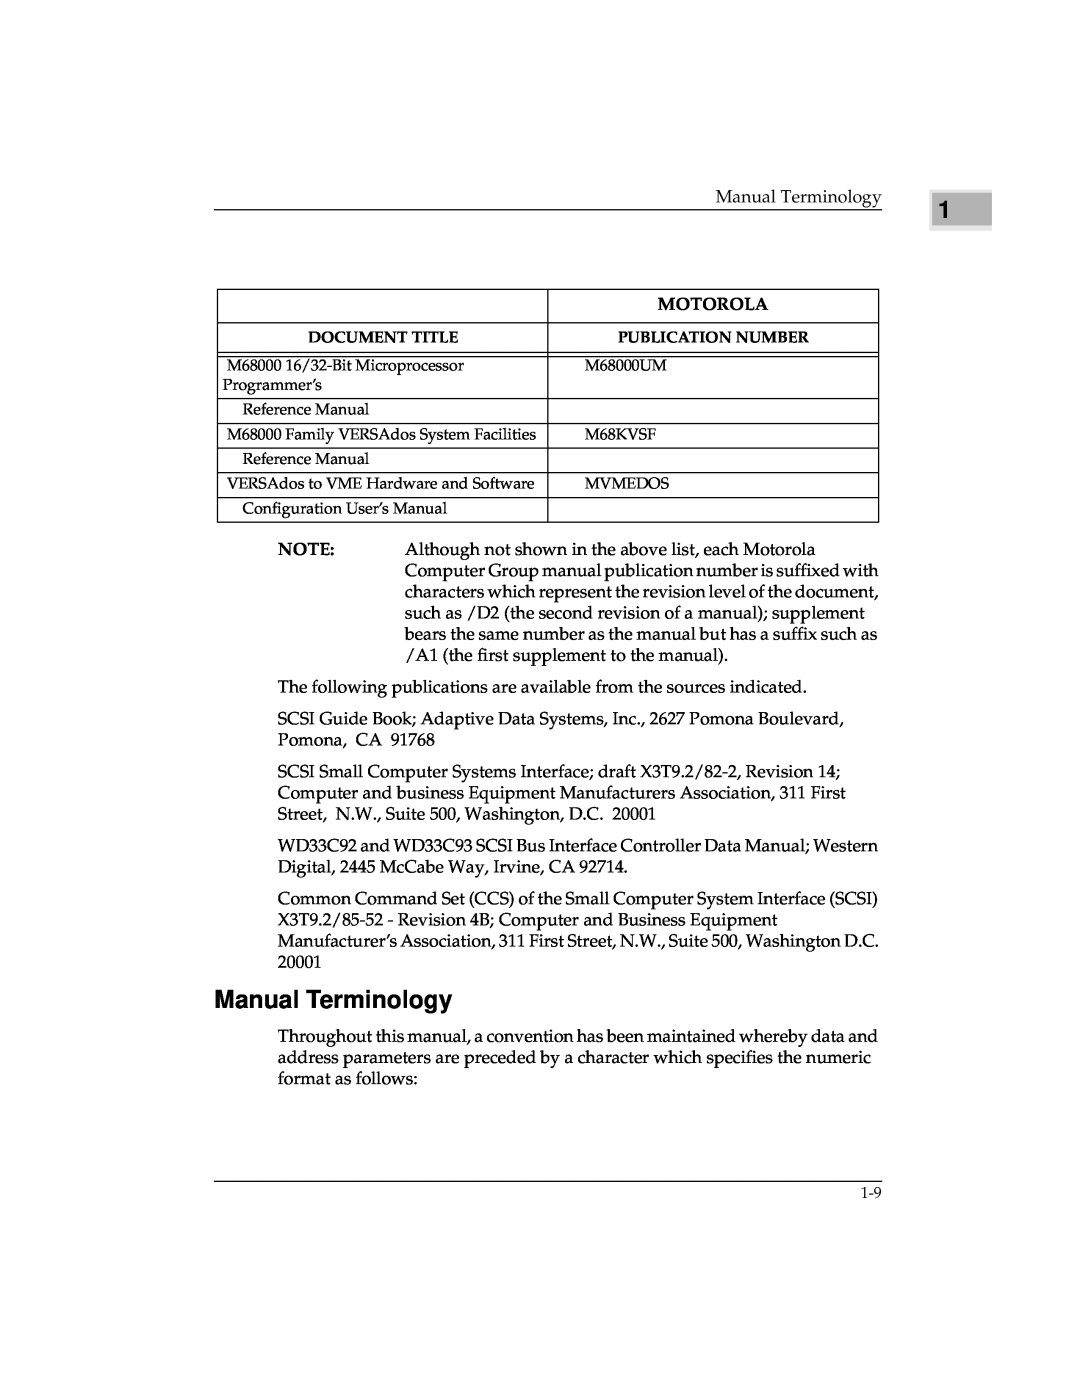 Emerson MVME147 manual Manual Terminology, Motorola 